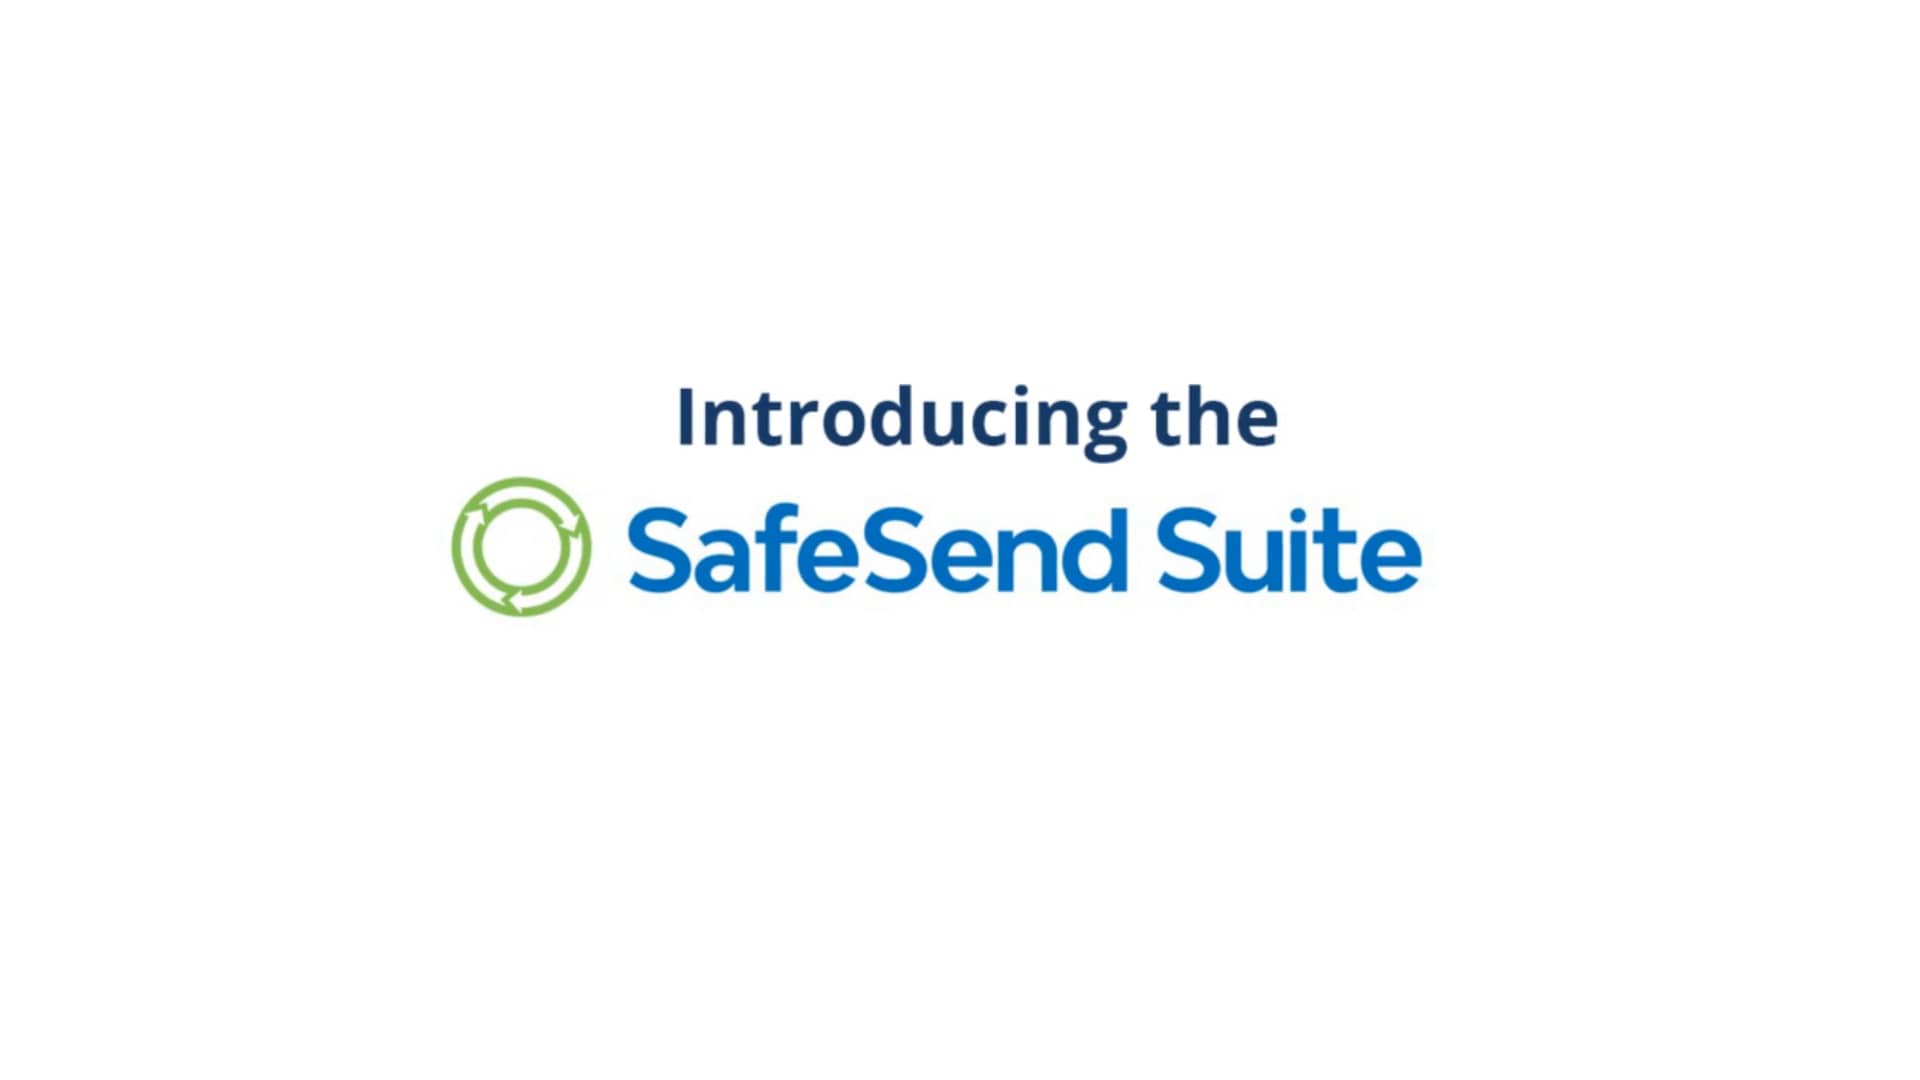 SafeSend Suite Overview | SafeSend on Vimeo